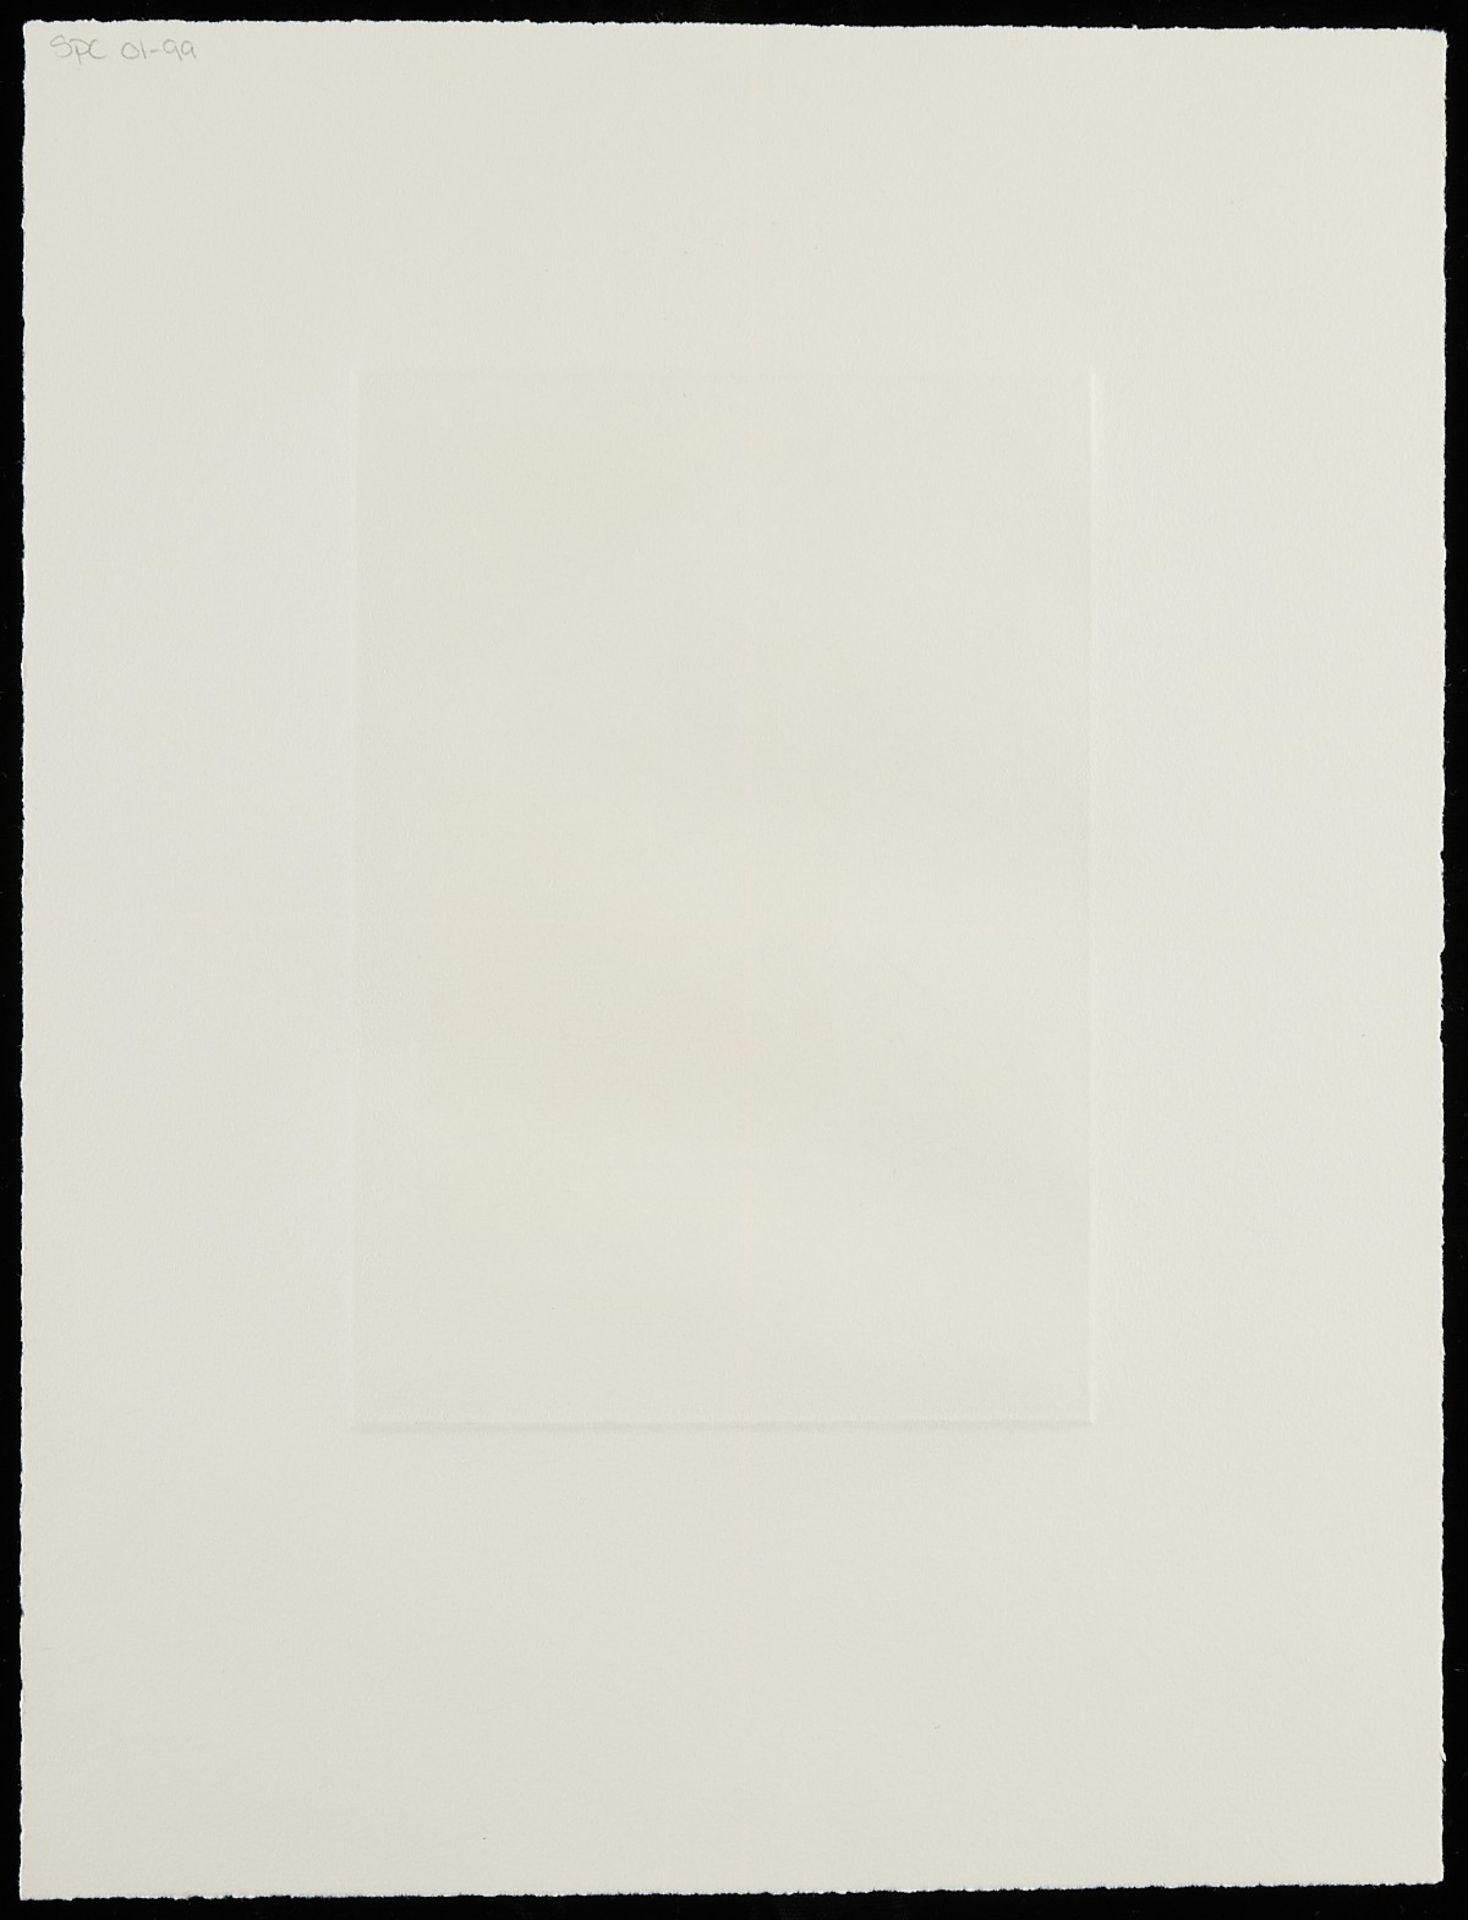 Grp: 8 Chagoya "Return To Goya's Caprichos" Suite - Image 18 of 40